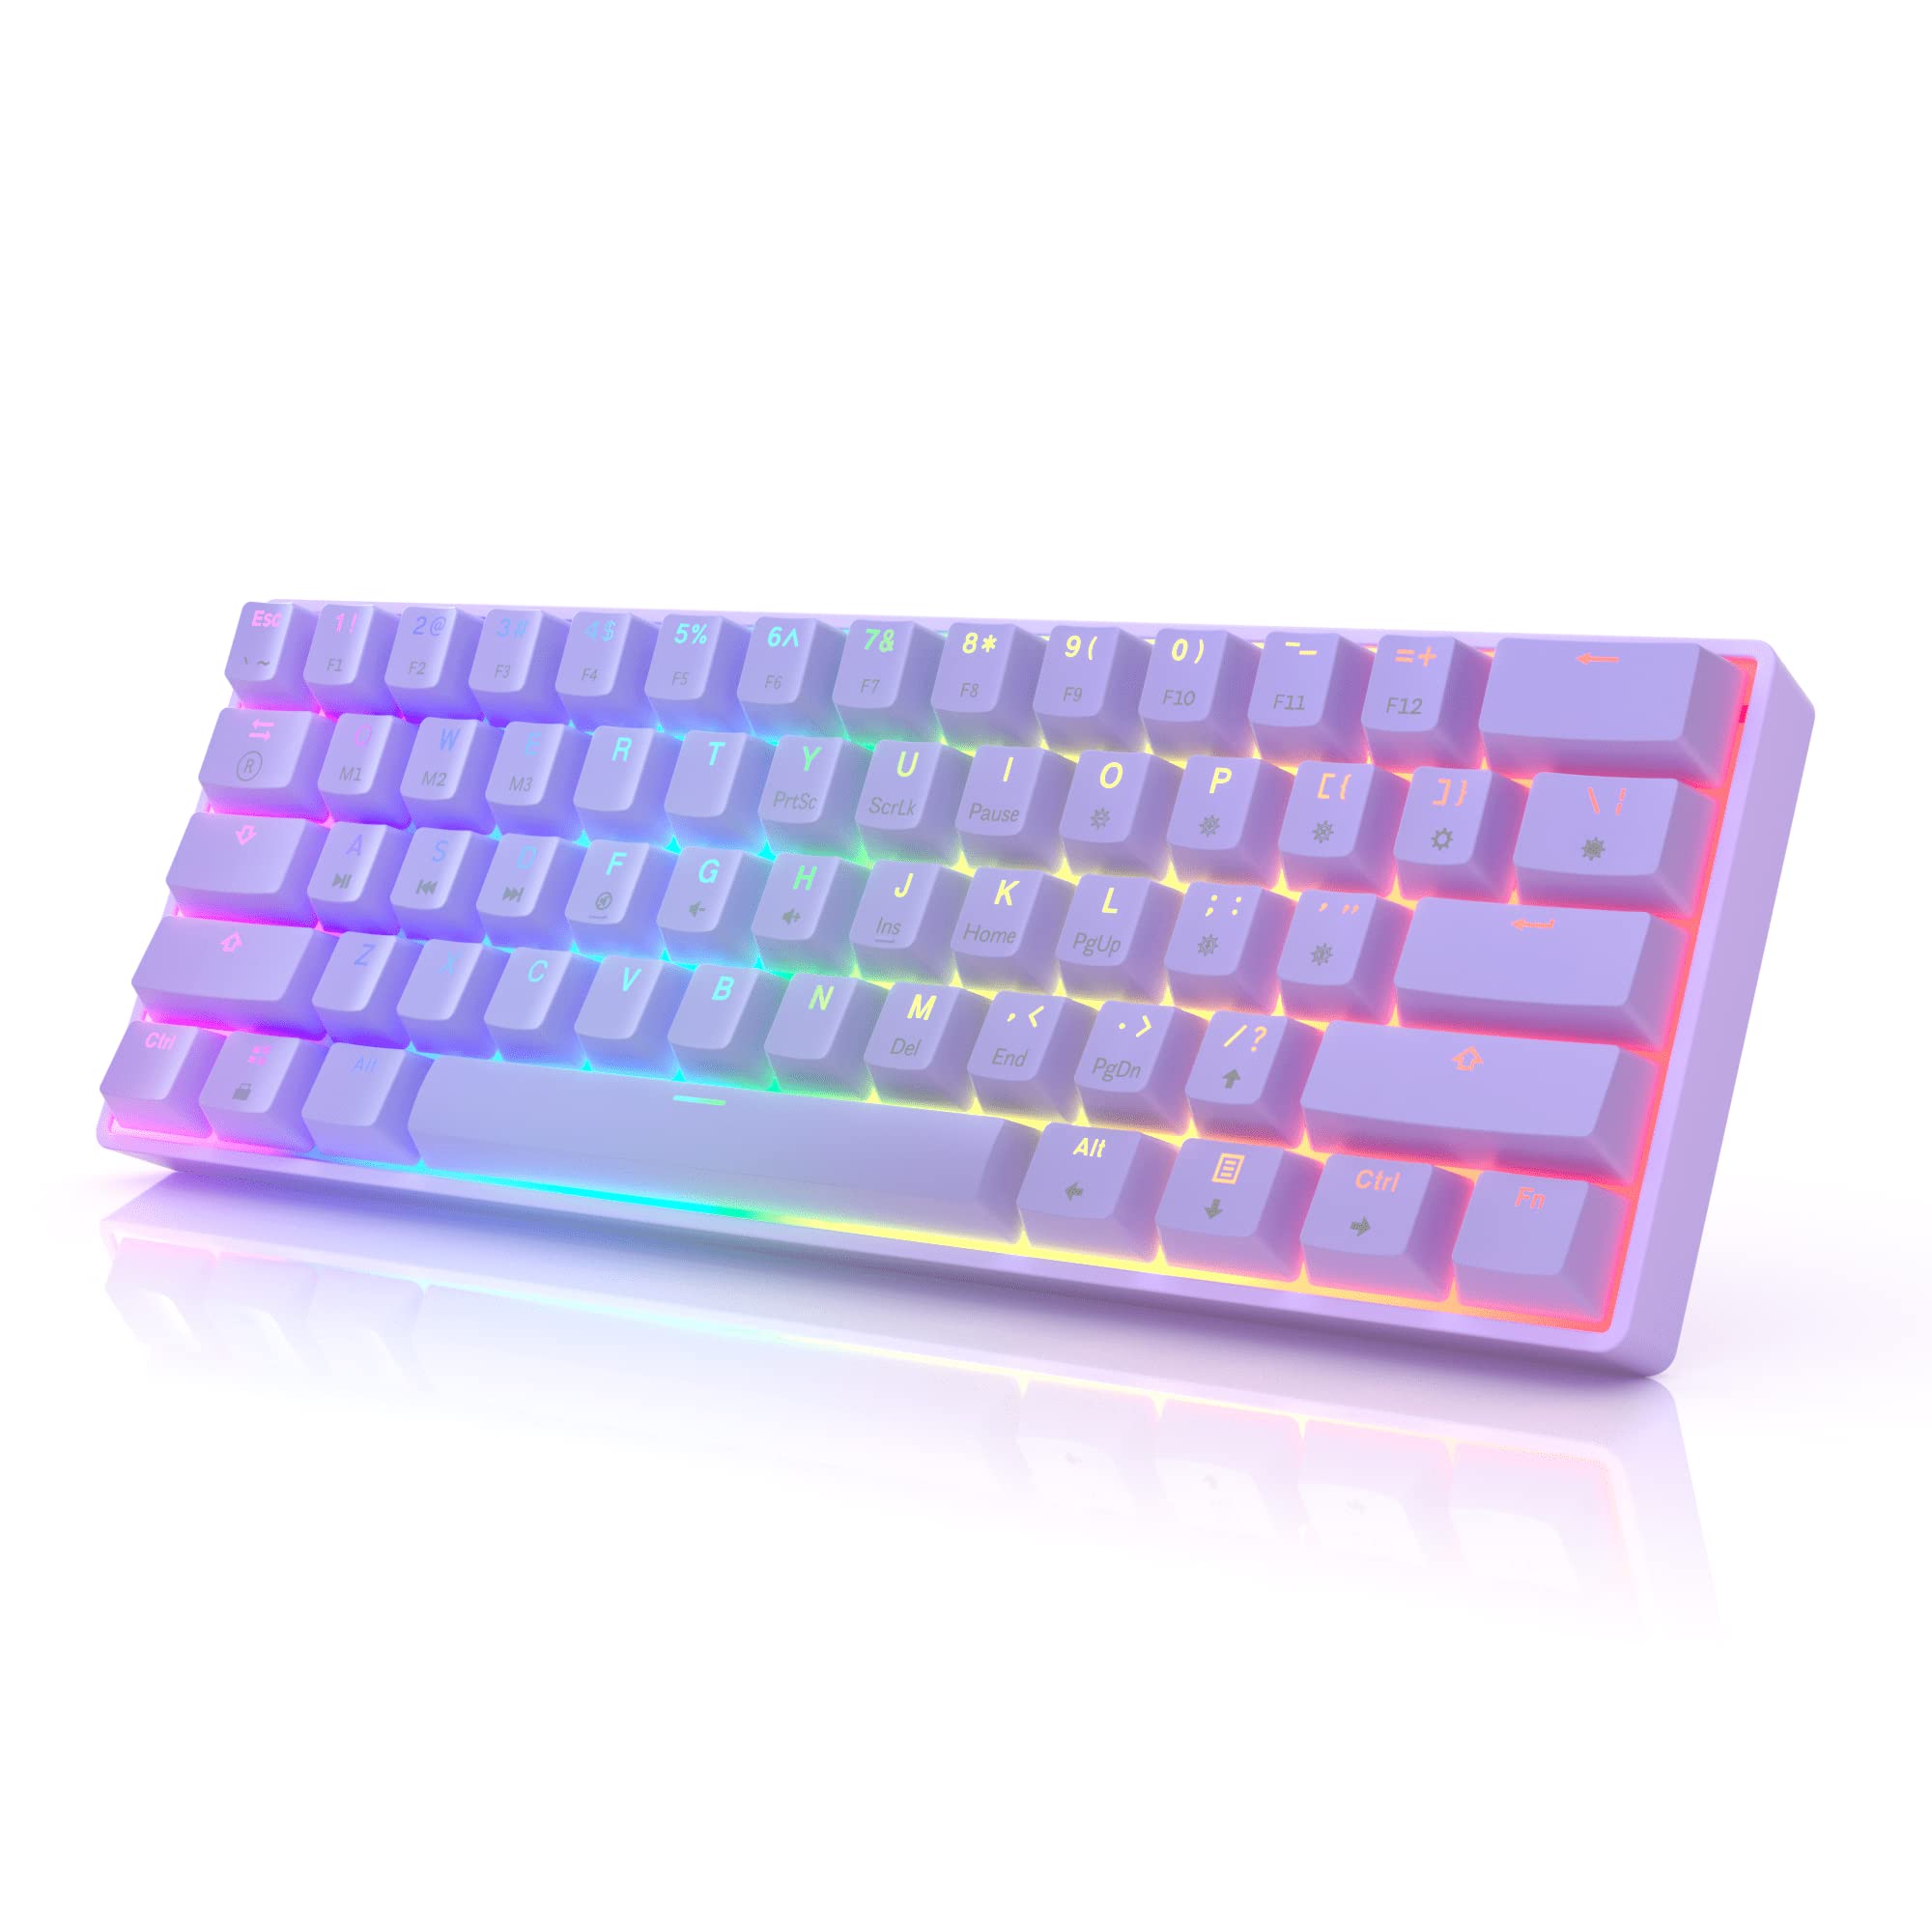 HK GAMING GK61 Mechanical Gaming Keyboard - 61 Keys Multi Color RGB Illuminated LED Backlit Wired Programmable for PC/Mac Gamer (Gateron Optical Silver, Lavender)